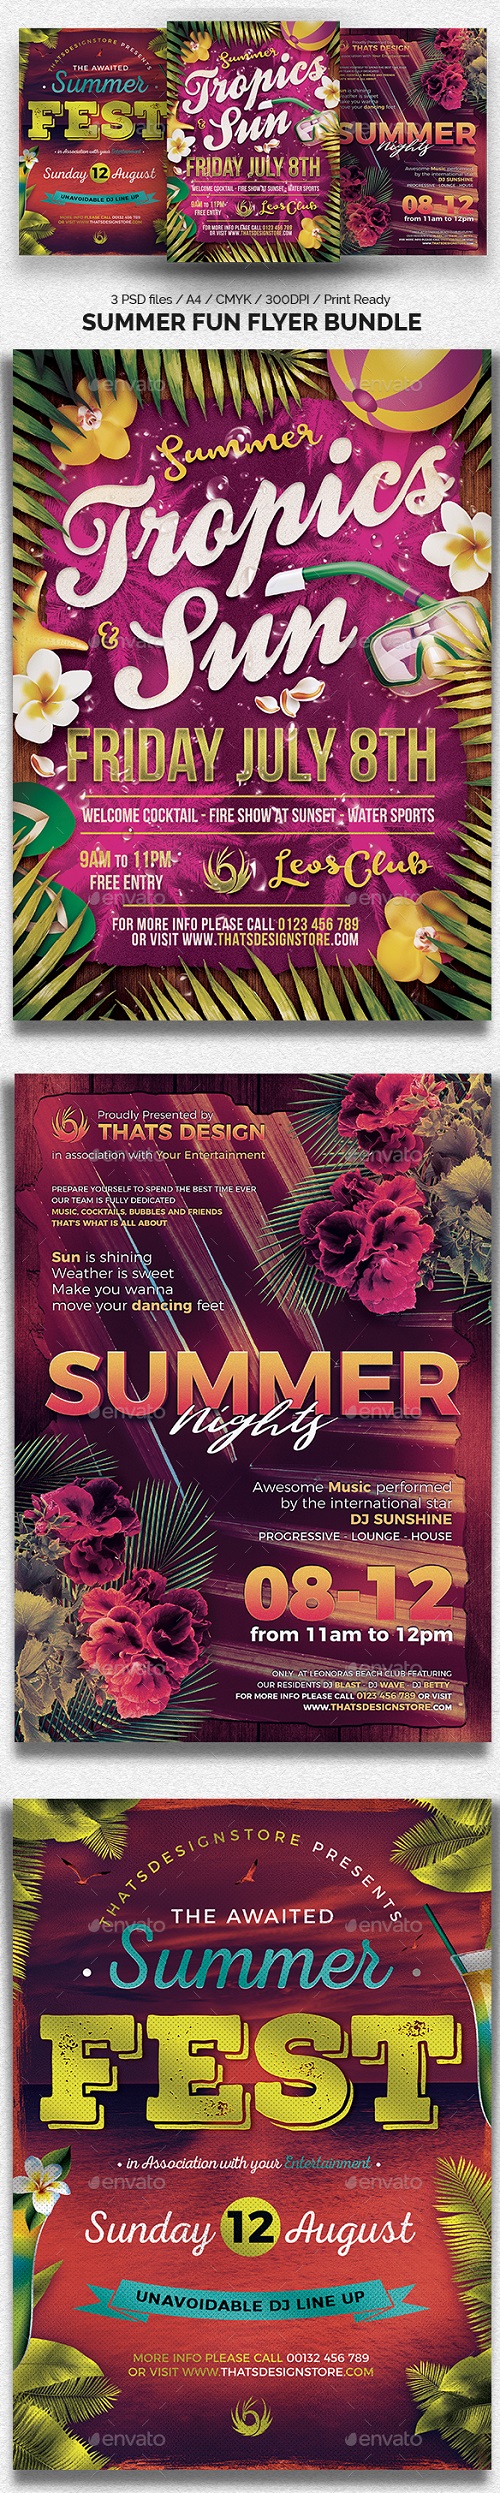 Summer Fun Flyer Bundle - 19900437 - 1479554